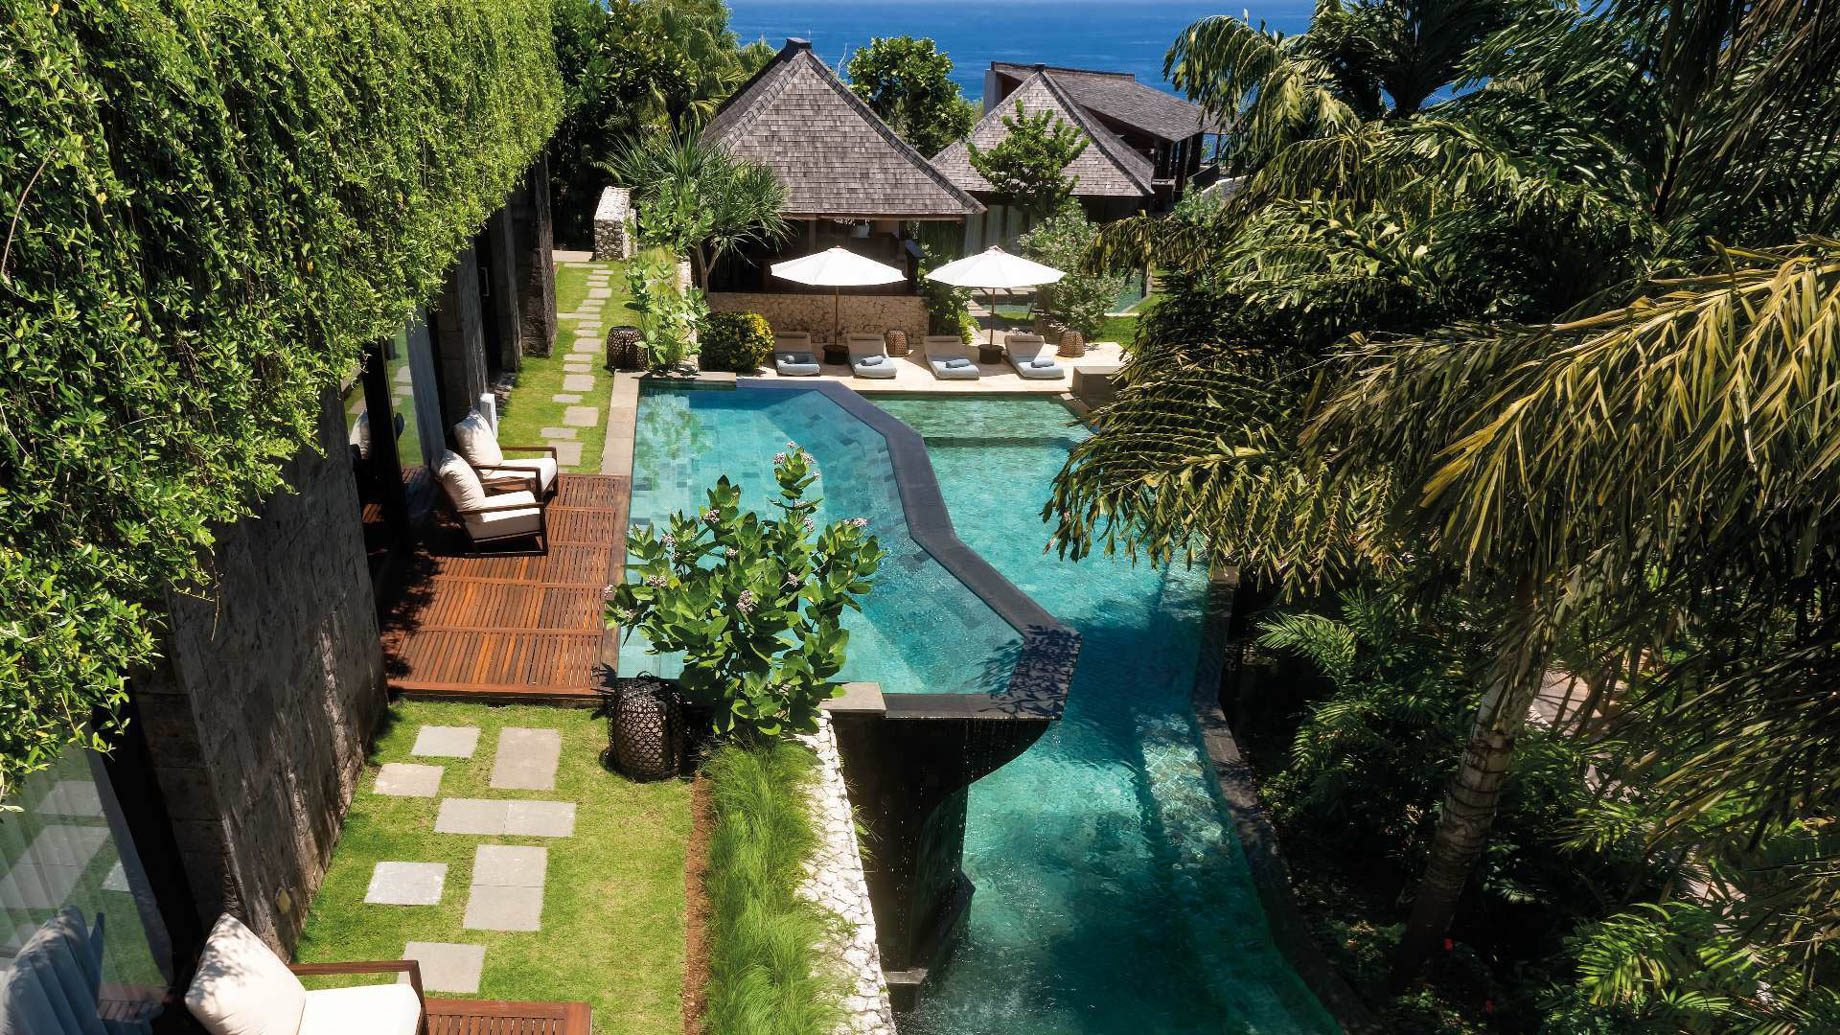 Bvlgari Resort Bali – Uluwatu, Bali, Indonesia – The Mansions Pool Waterfall